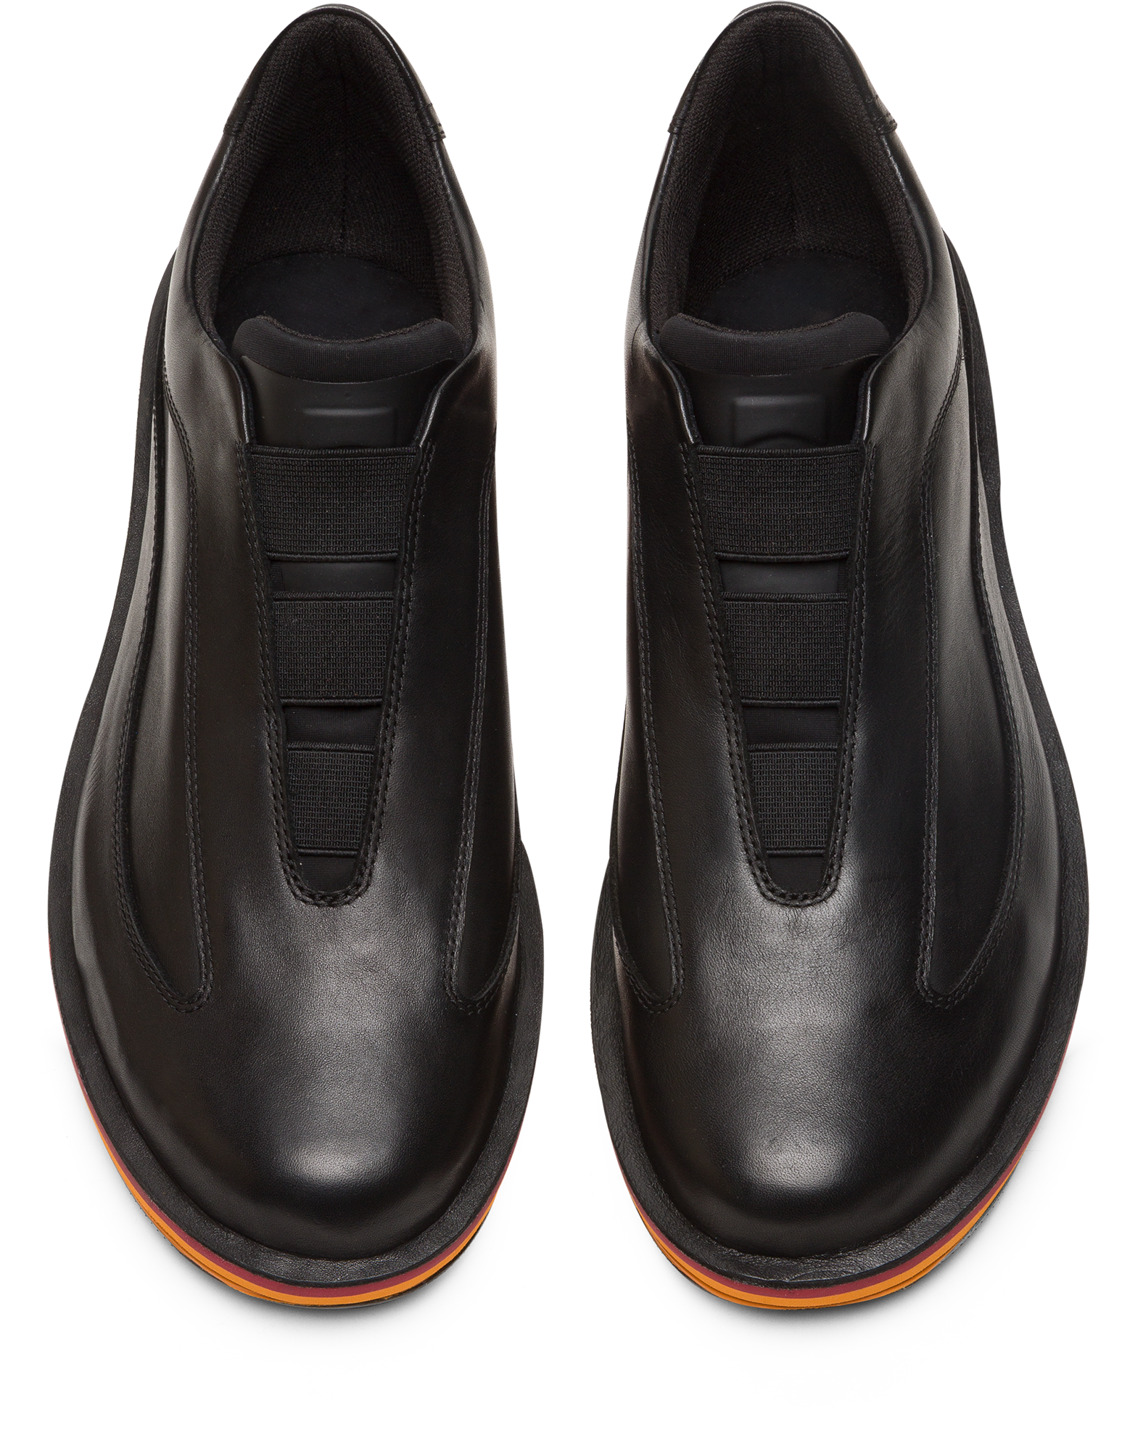 Rolling Black Sneakers for Men - Camper Shoes